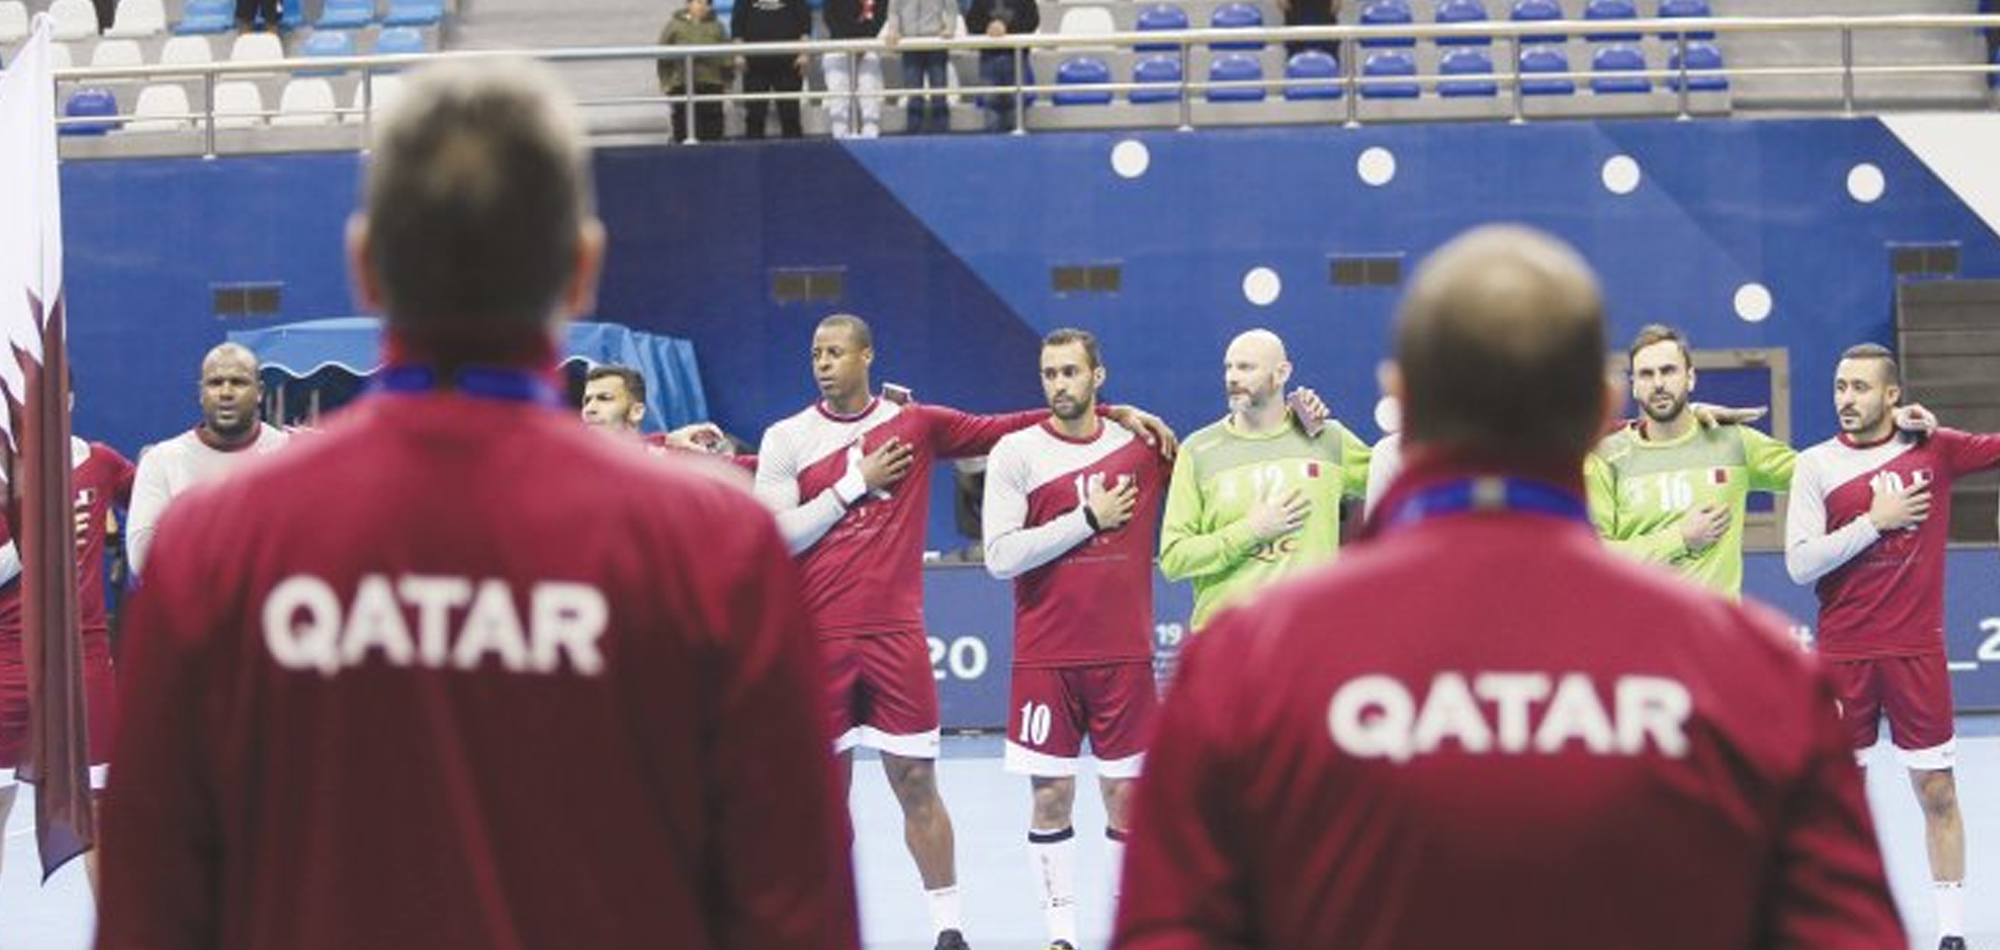 Qatar name 24-member squad for World Handball Championship